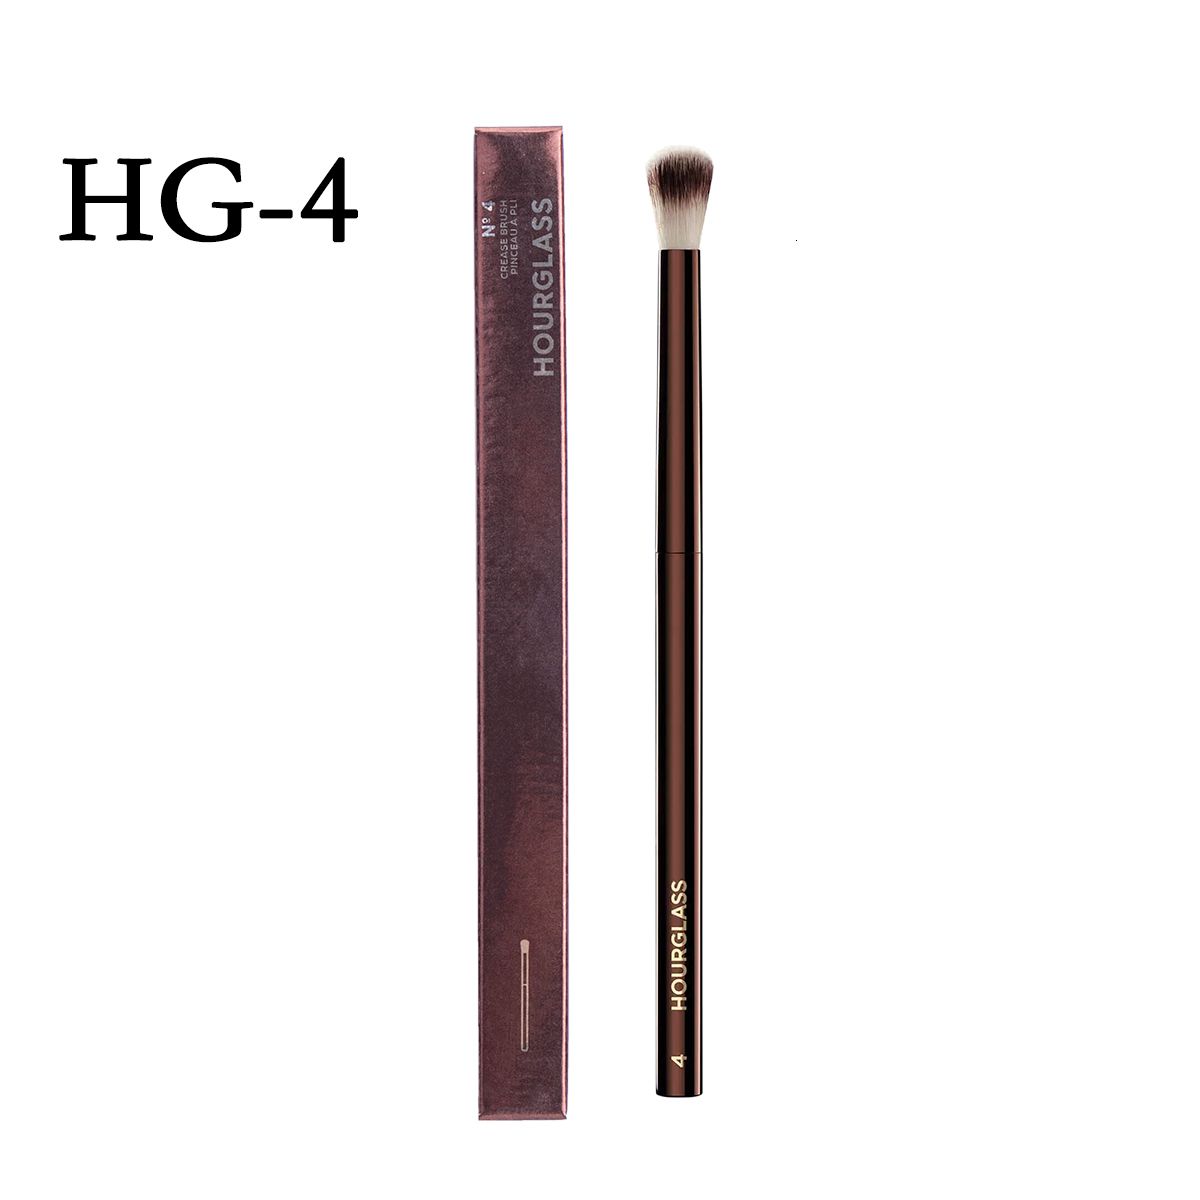 HG-4